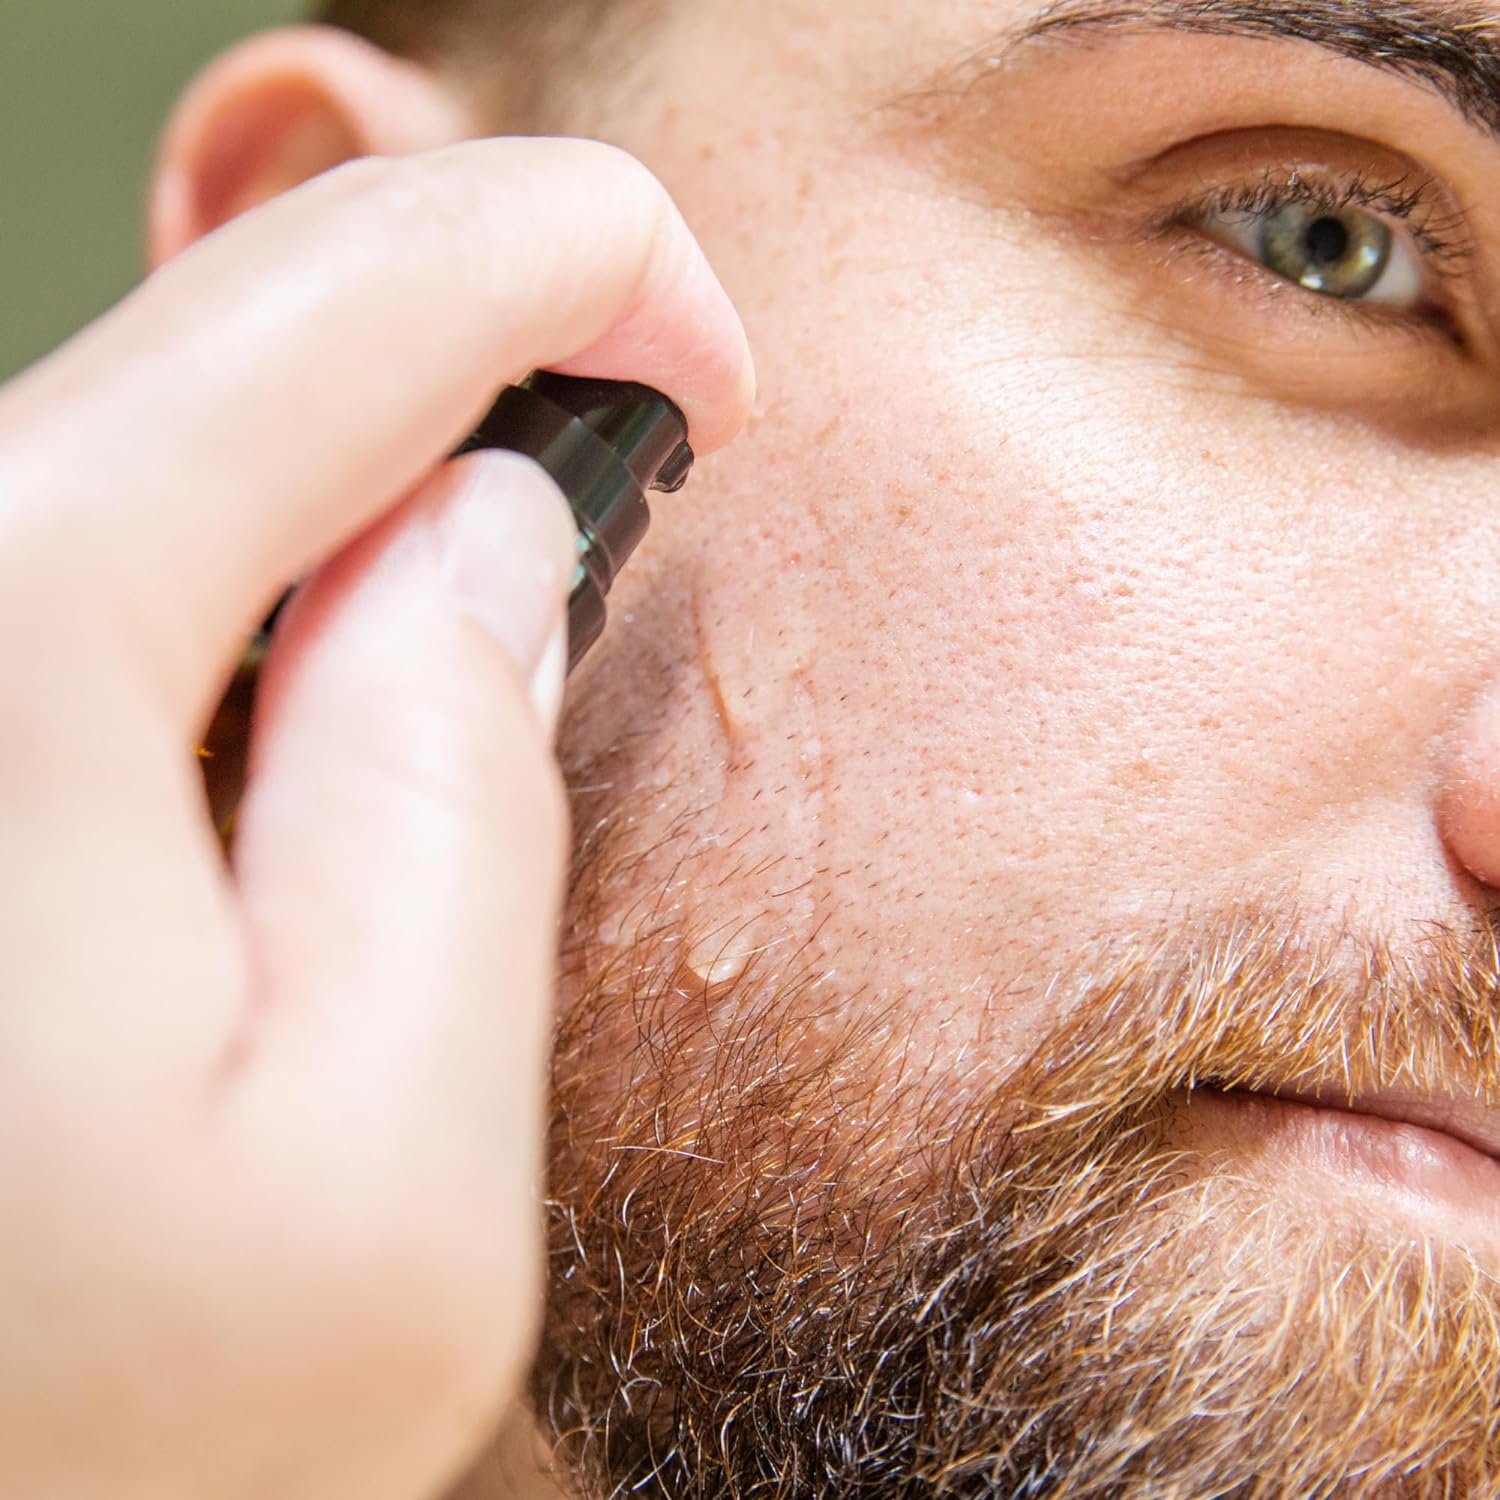 moisturize your dry beard skin!